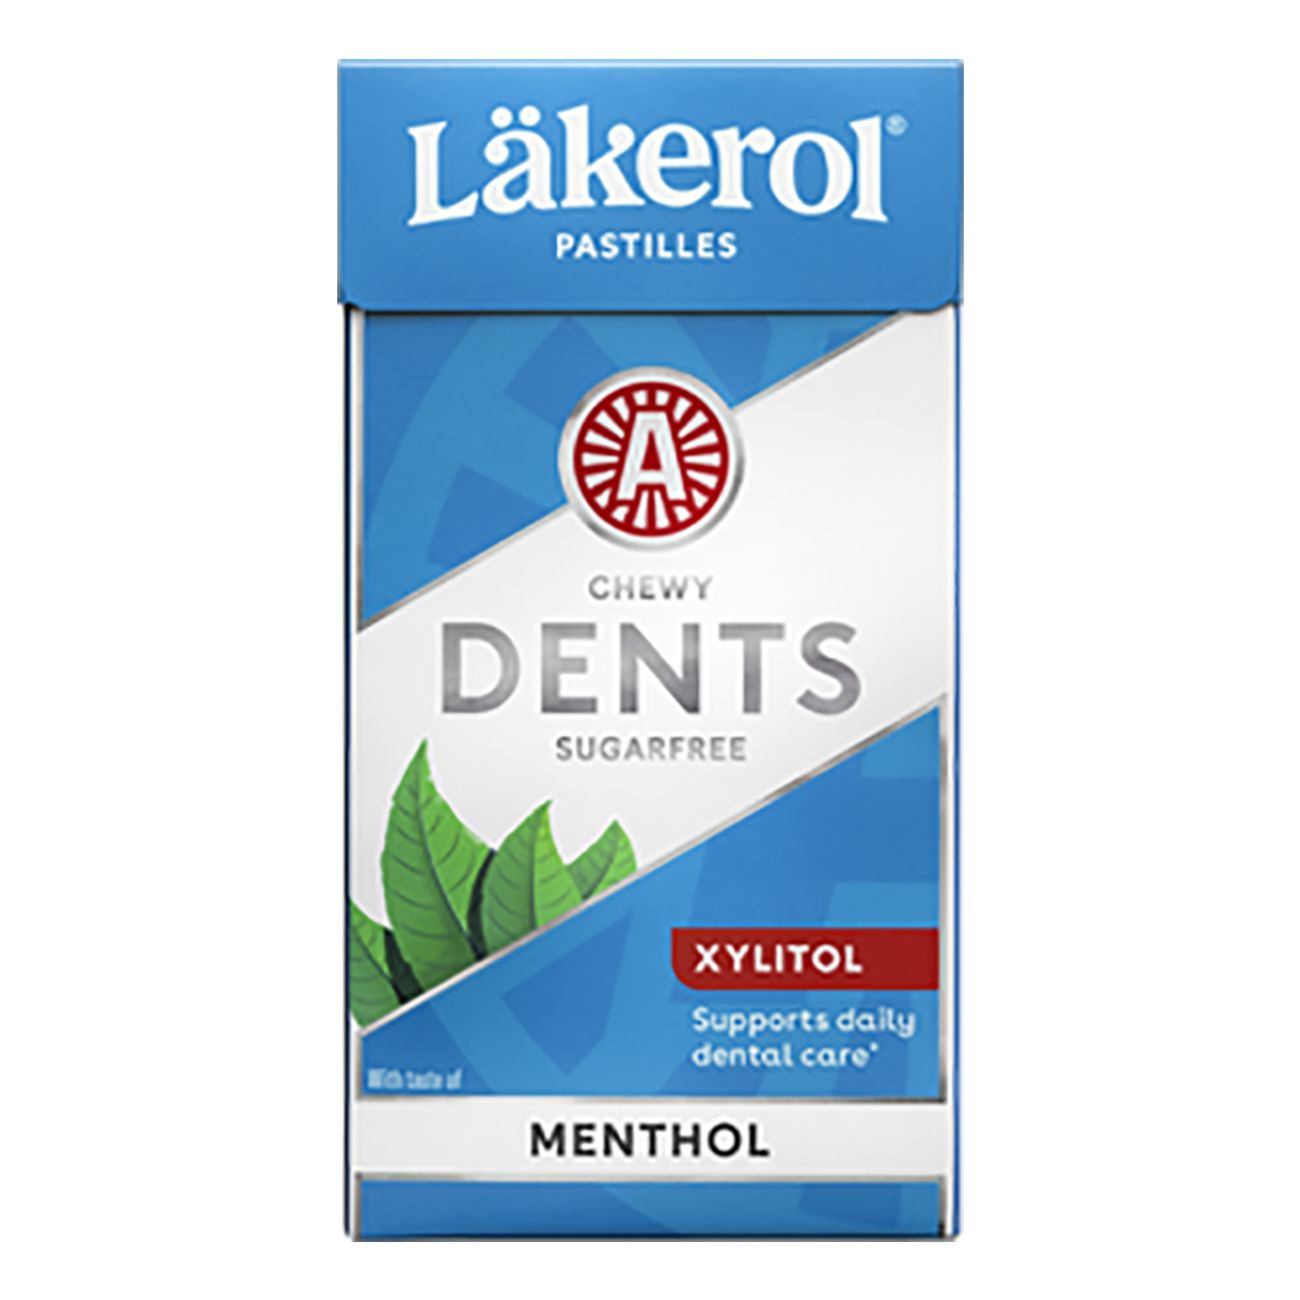 lakerol-dents-menthol-78608-1